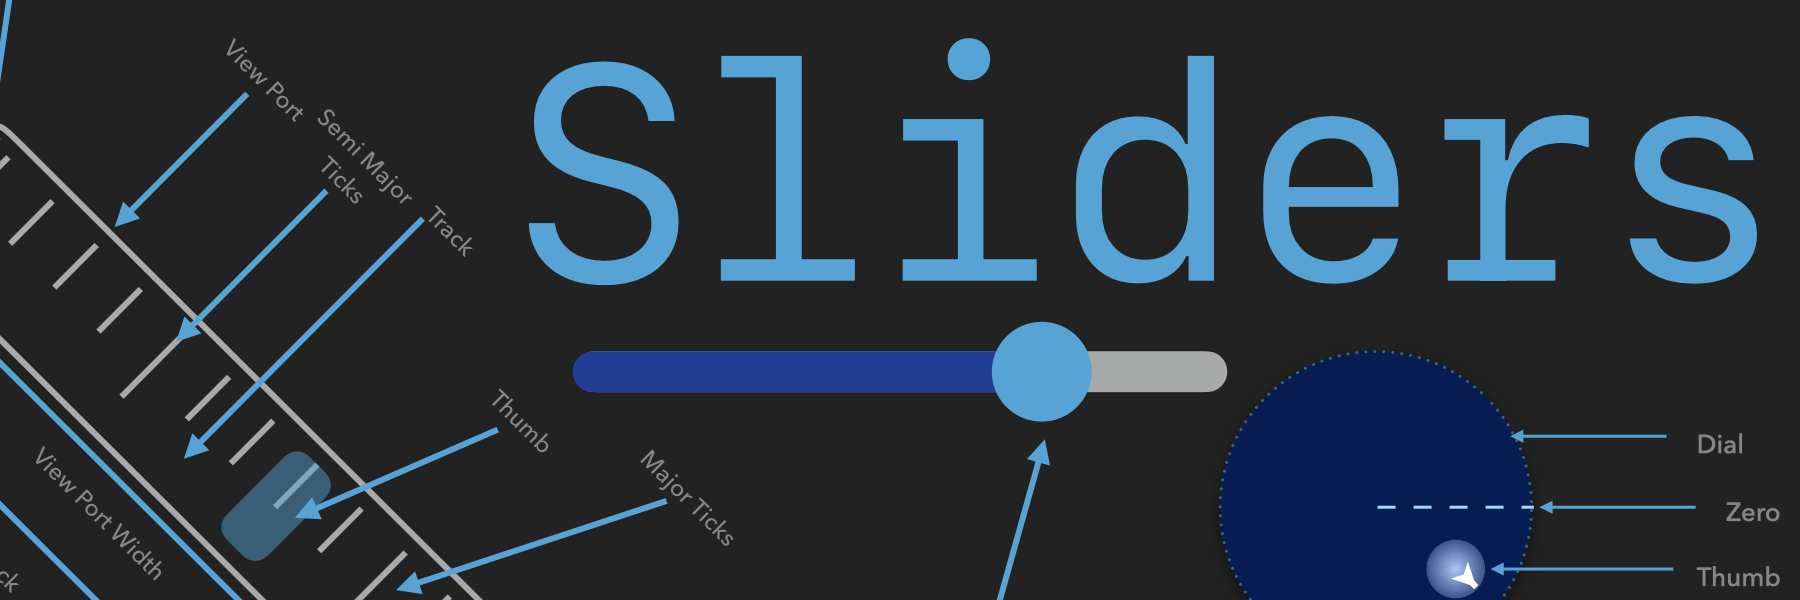 sliders-logo.png